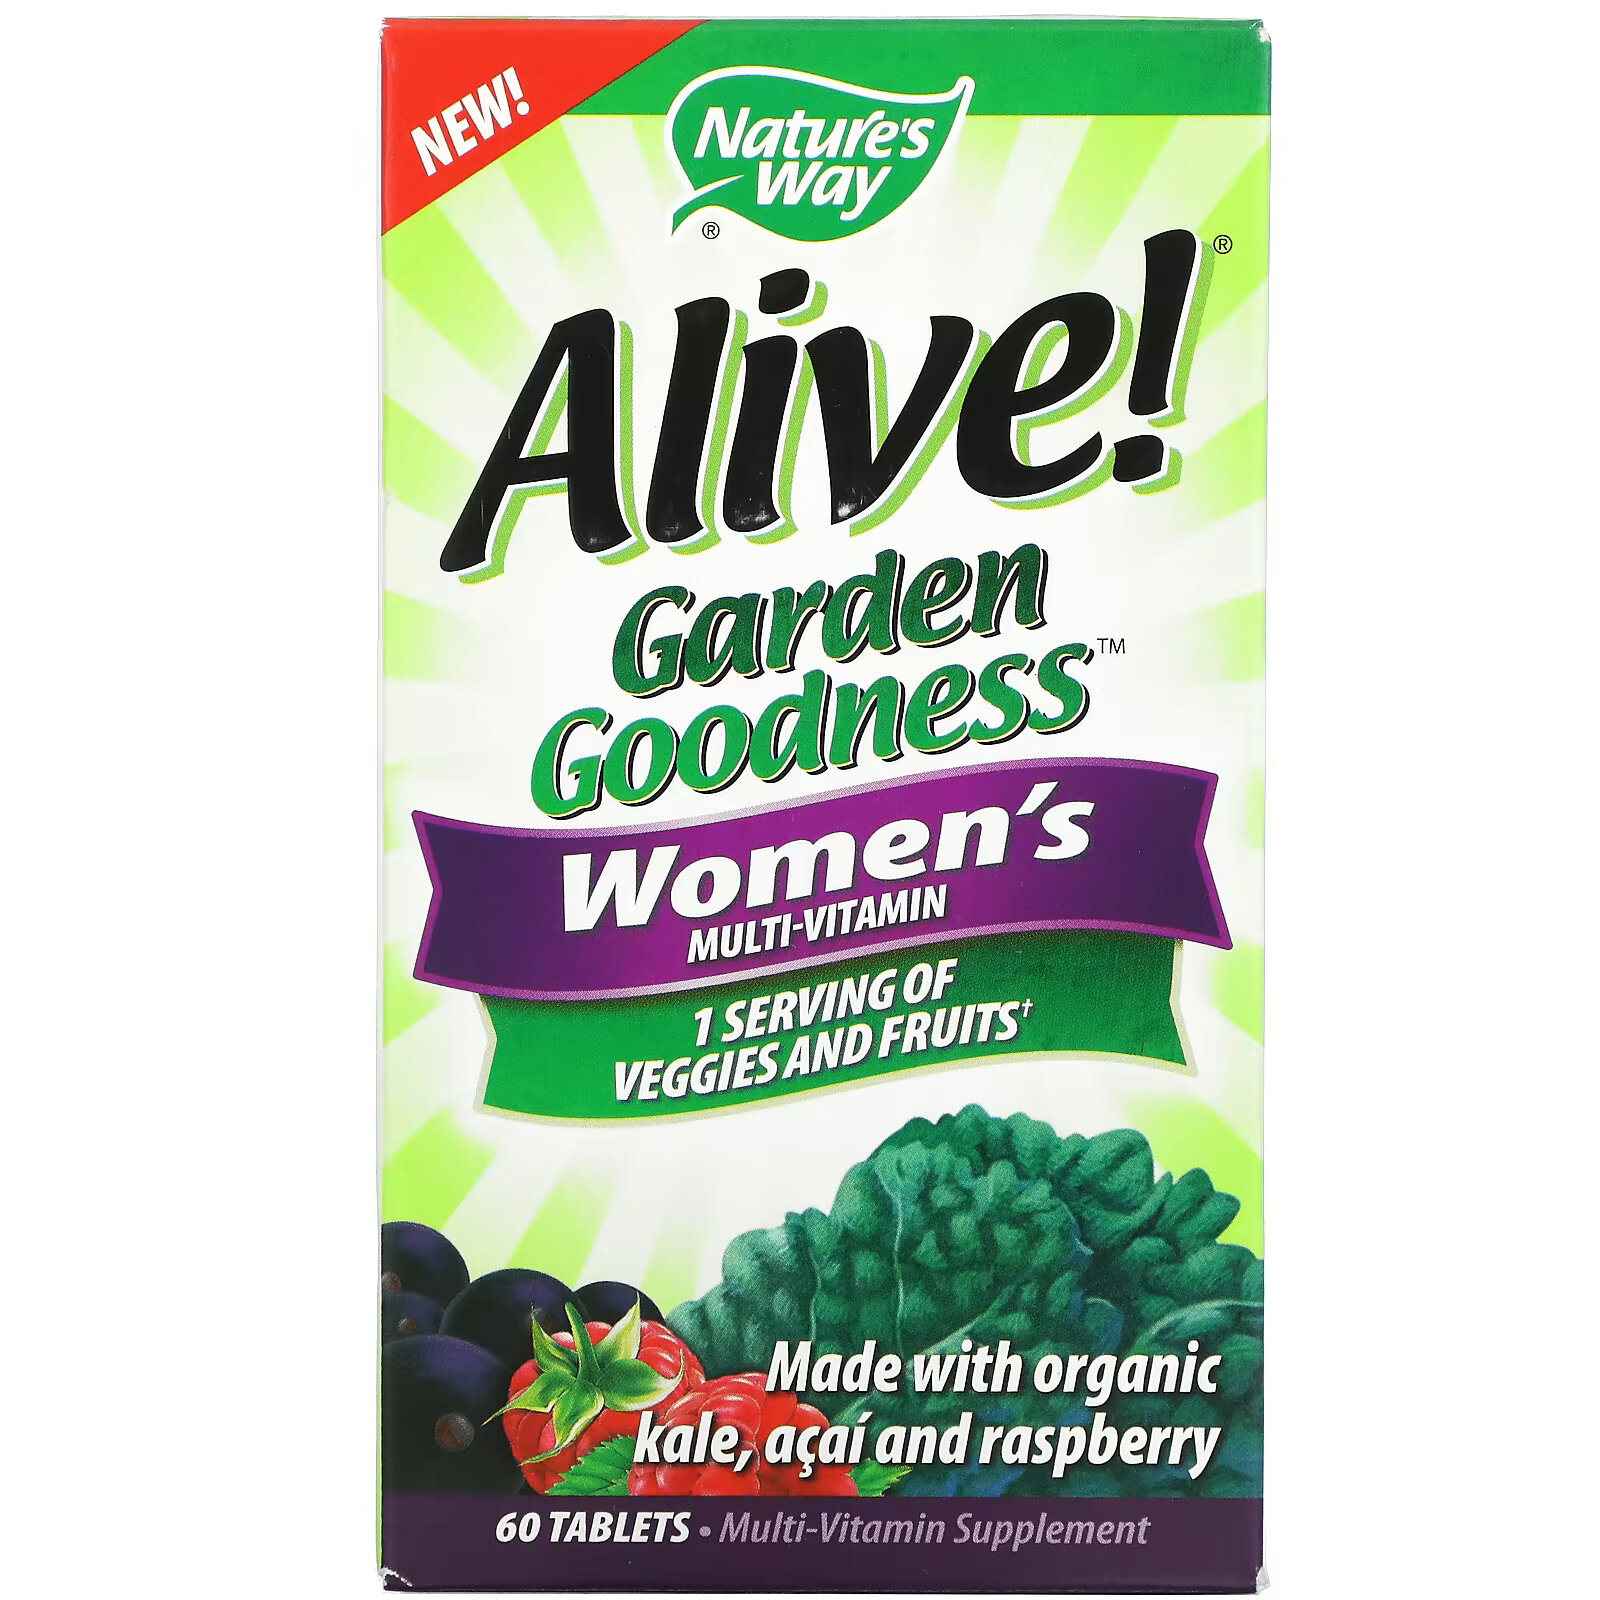 Мультивитамин Nature's Way Alive! Garden Goodness для женщин, 60 таблеток